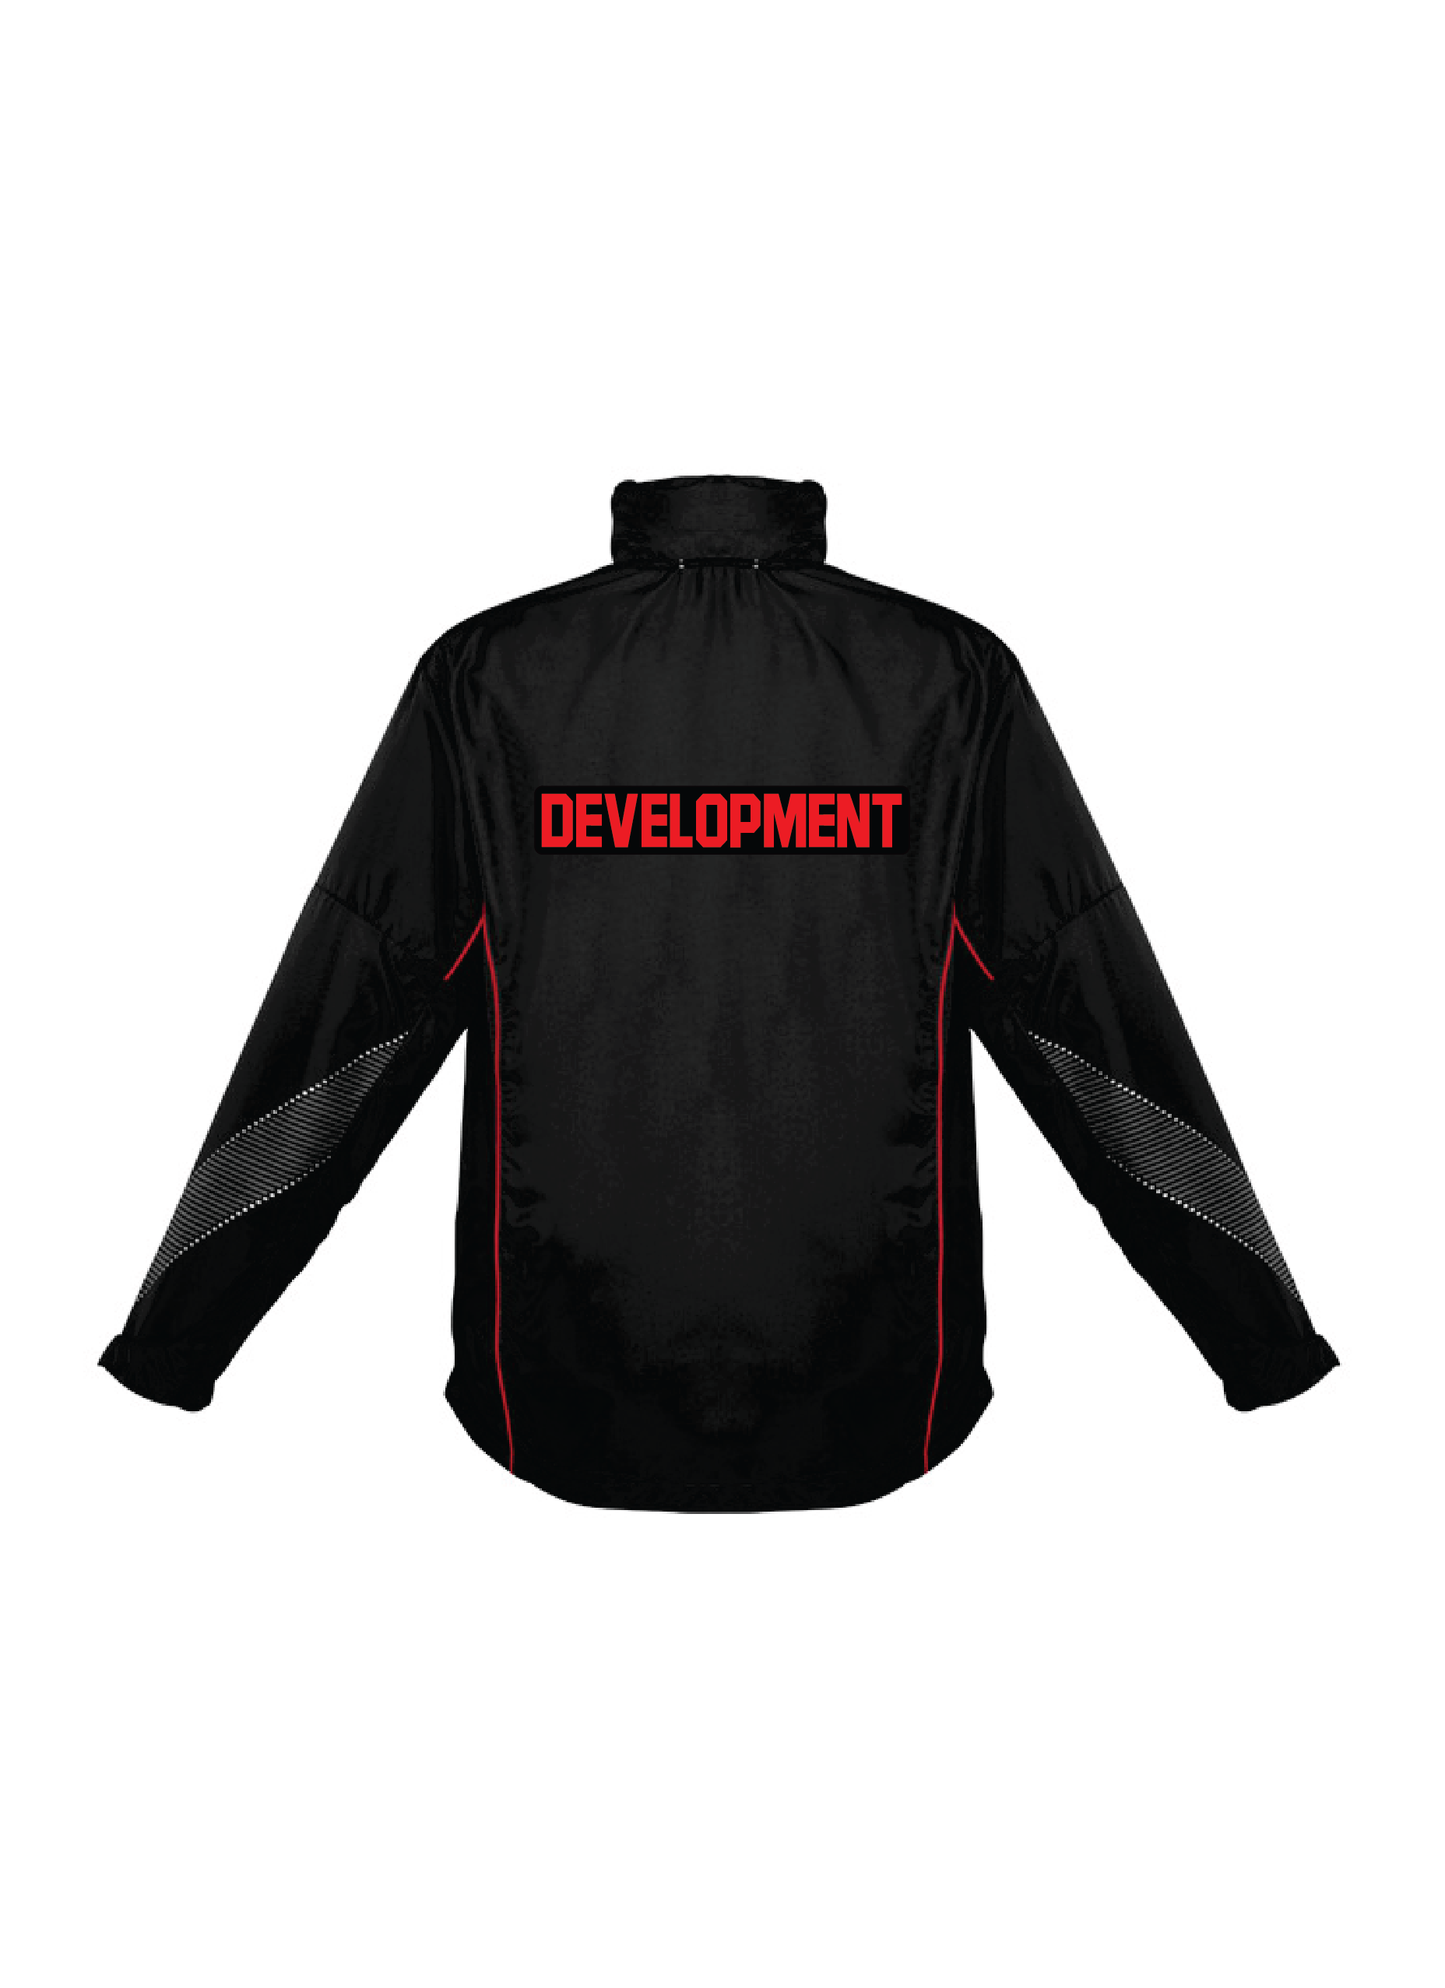 Development Warm Up Jacket